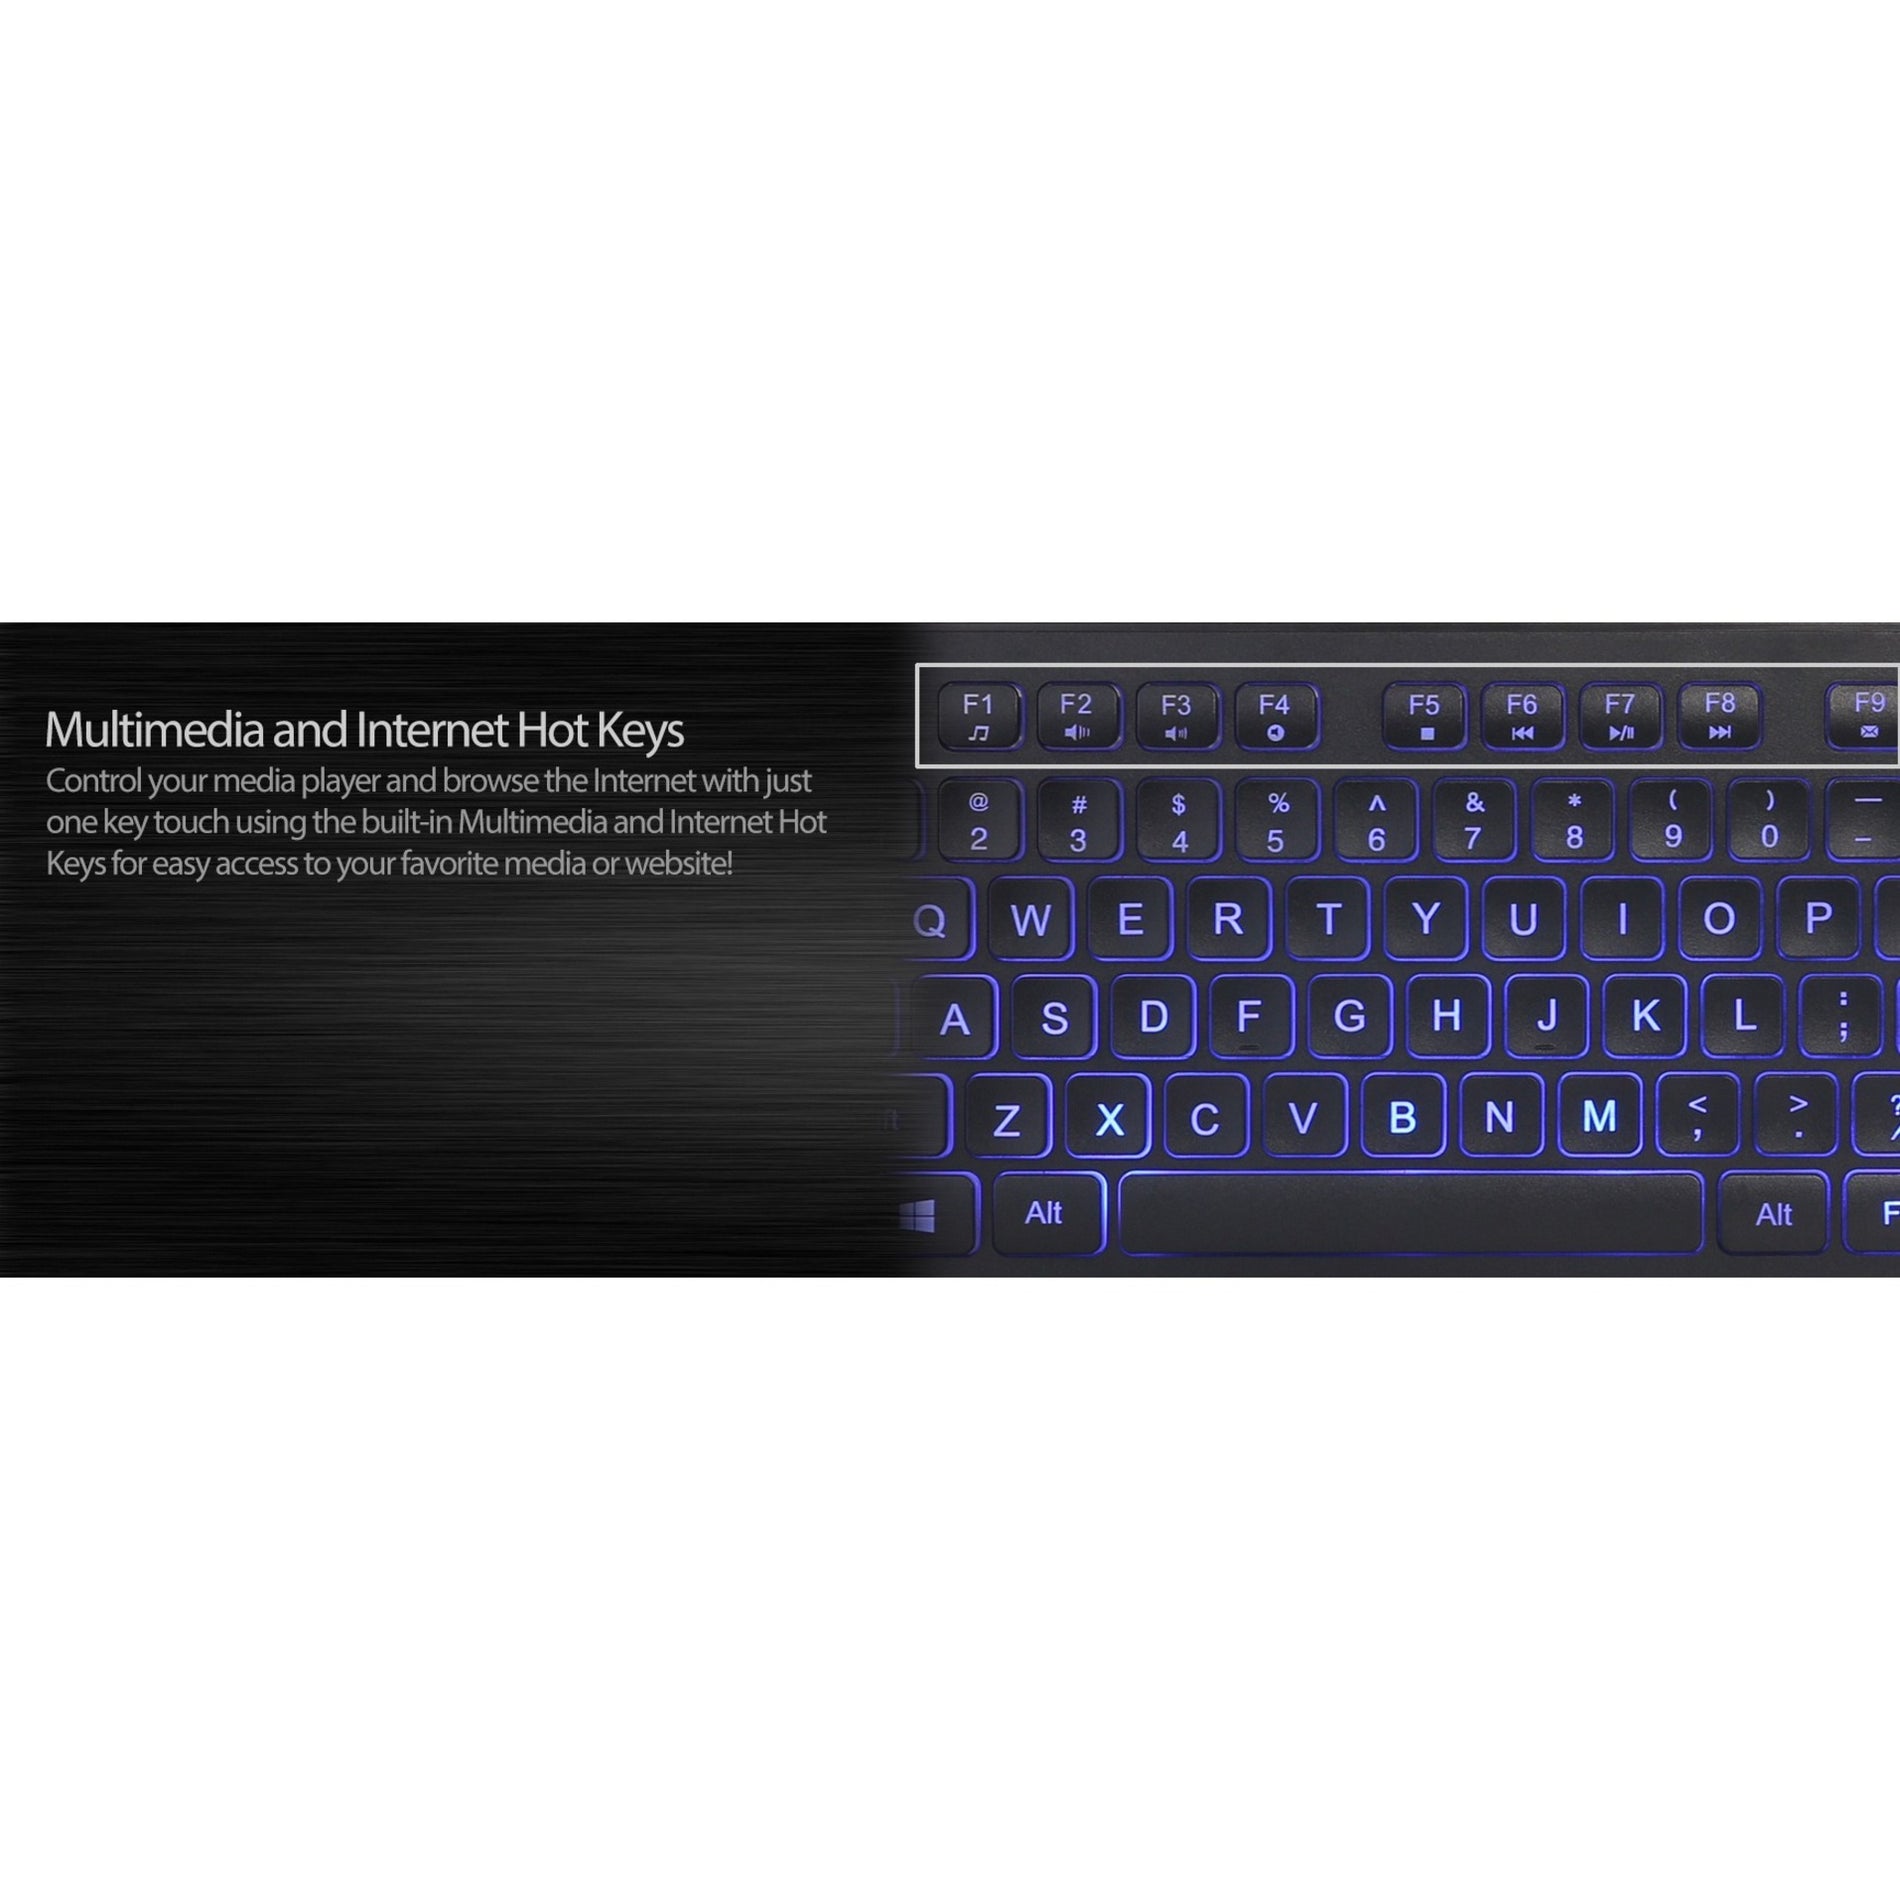 Adesso AKB-139EB Large Print Illuminated Desktop Keyboard, Backlit, Water Resistant, Quiet Keys